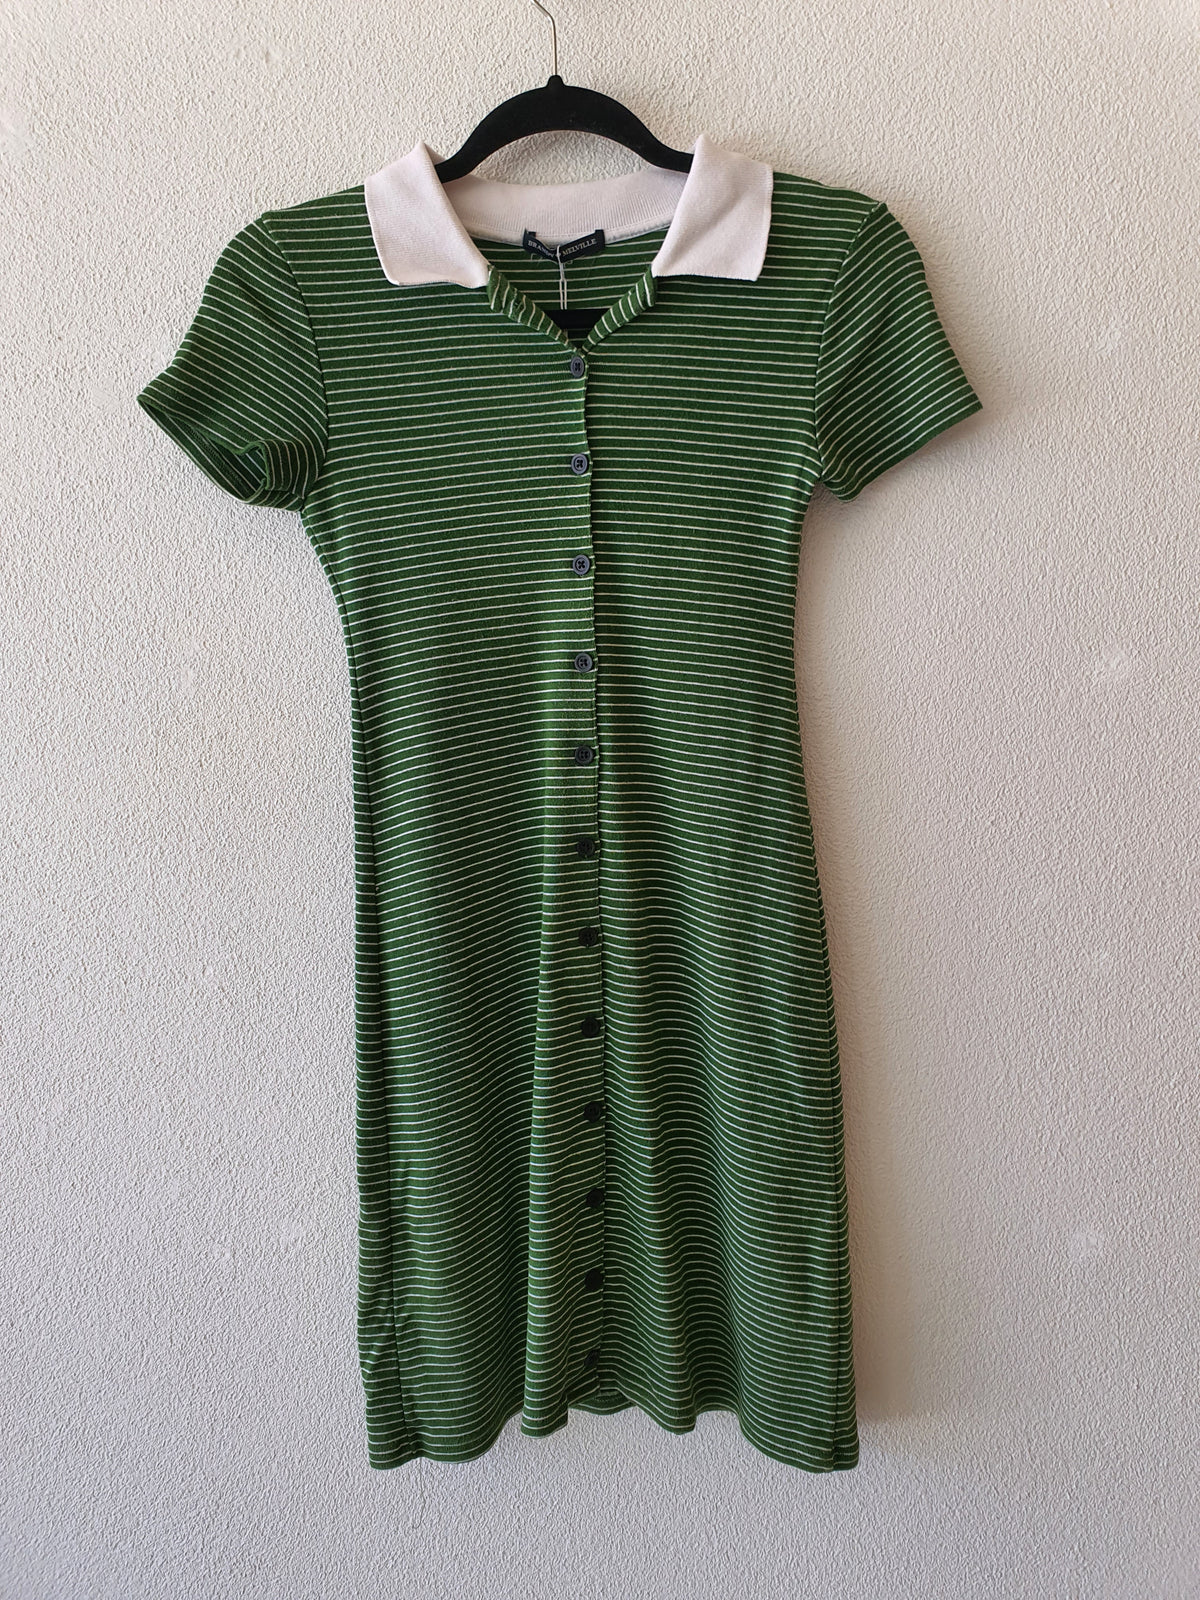 Brandy Melville Green &amp; White Stripe Dress Dress 6